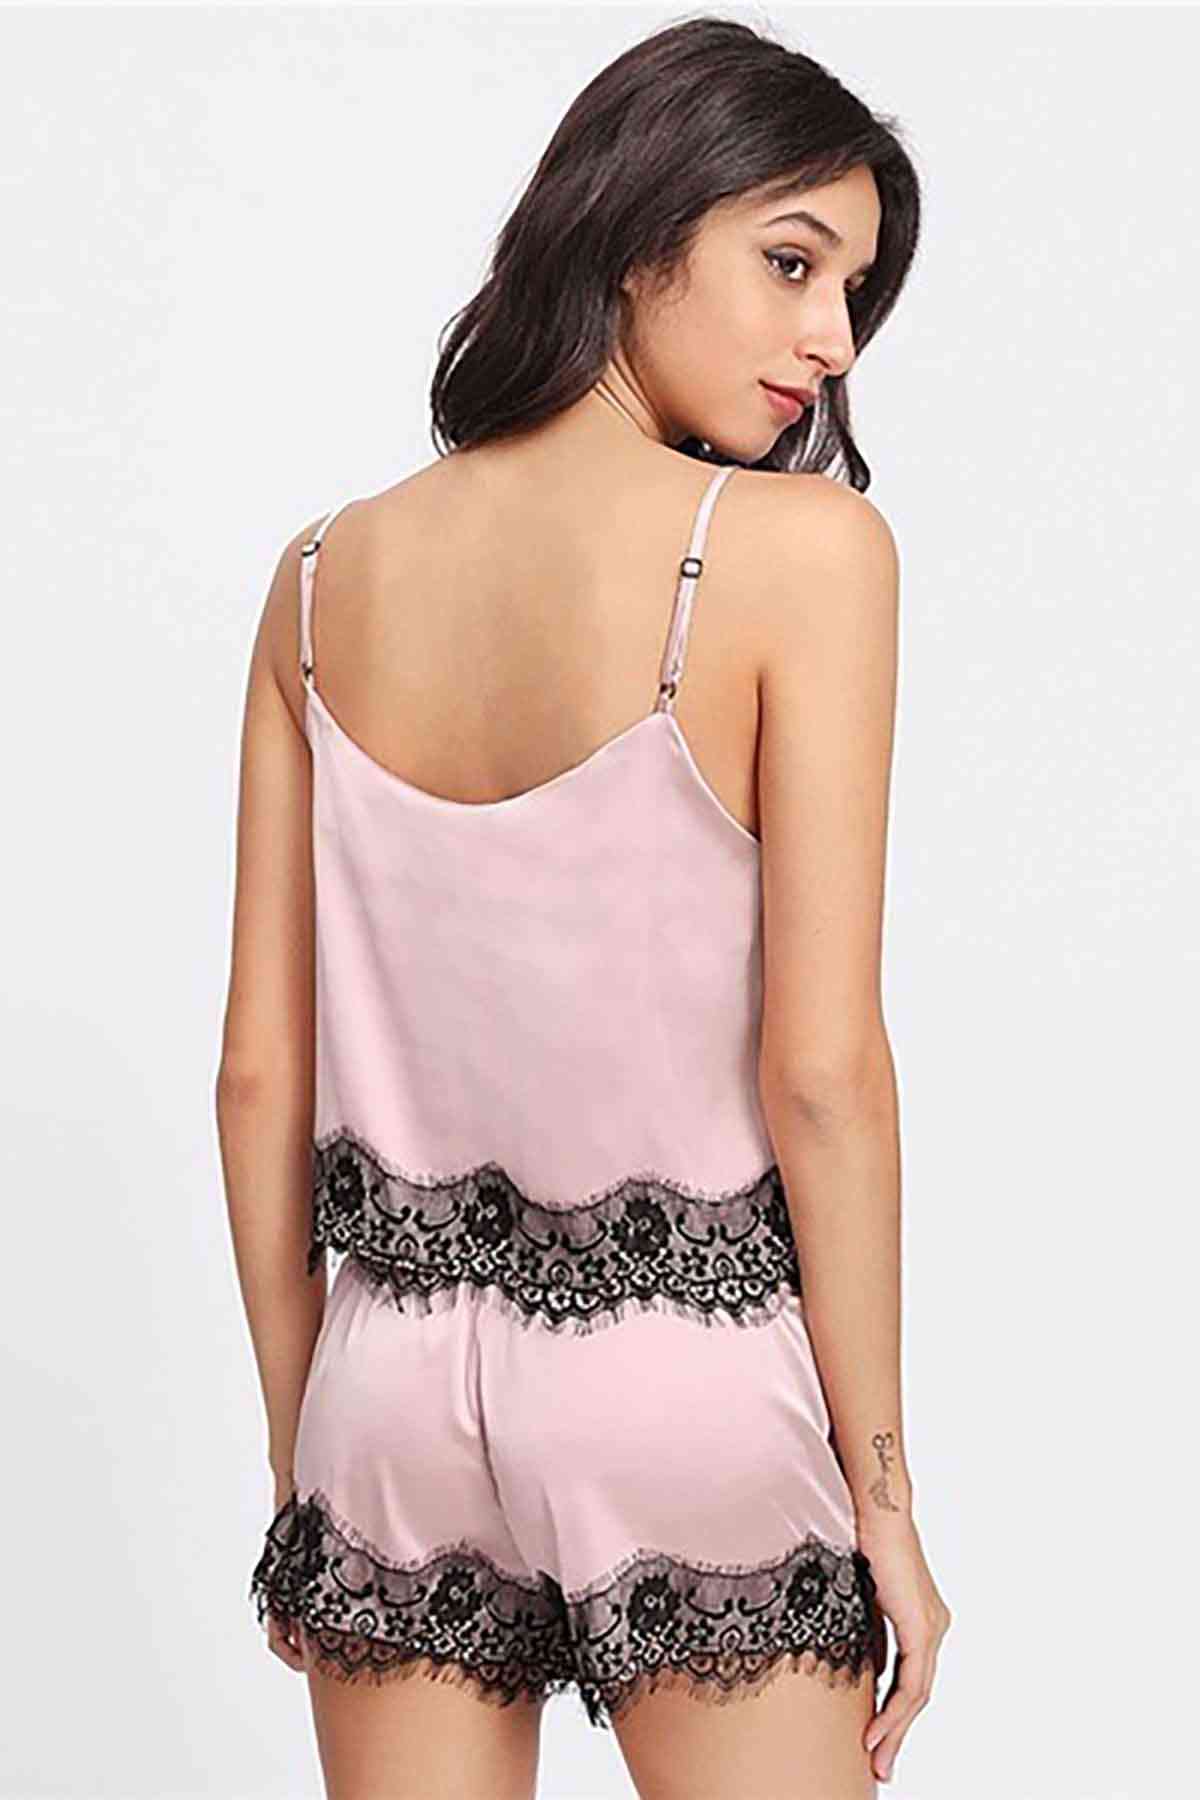 Lace Satin Sorted Nightgown Set Womens Nightgown Sleepwear Sexy Sleepwear Sexy Lingerie Lace Lingerie Babydoll Underwear